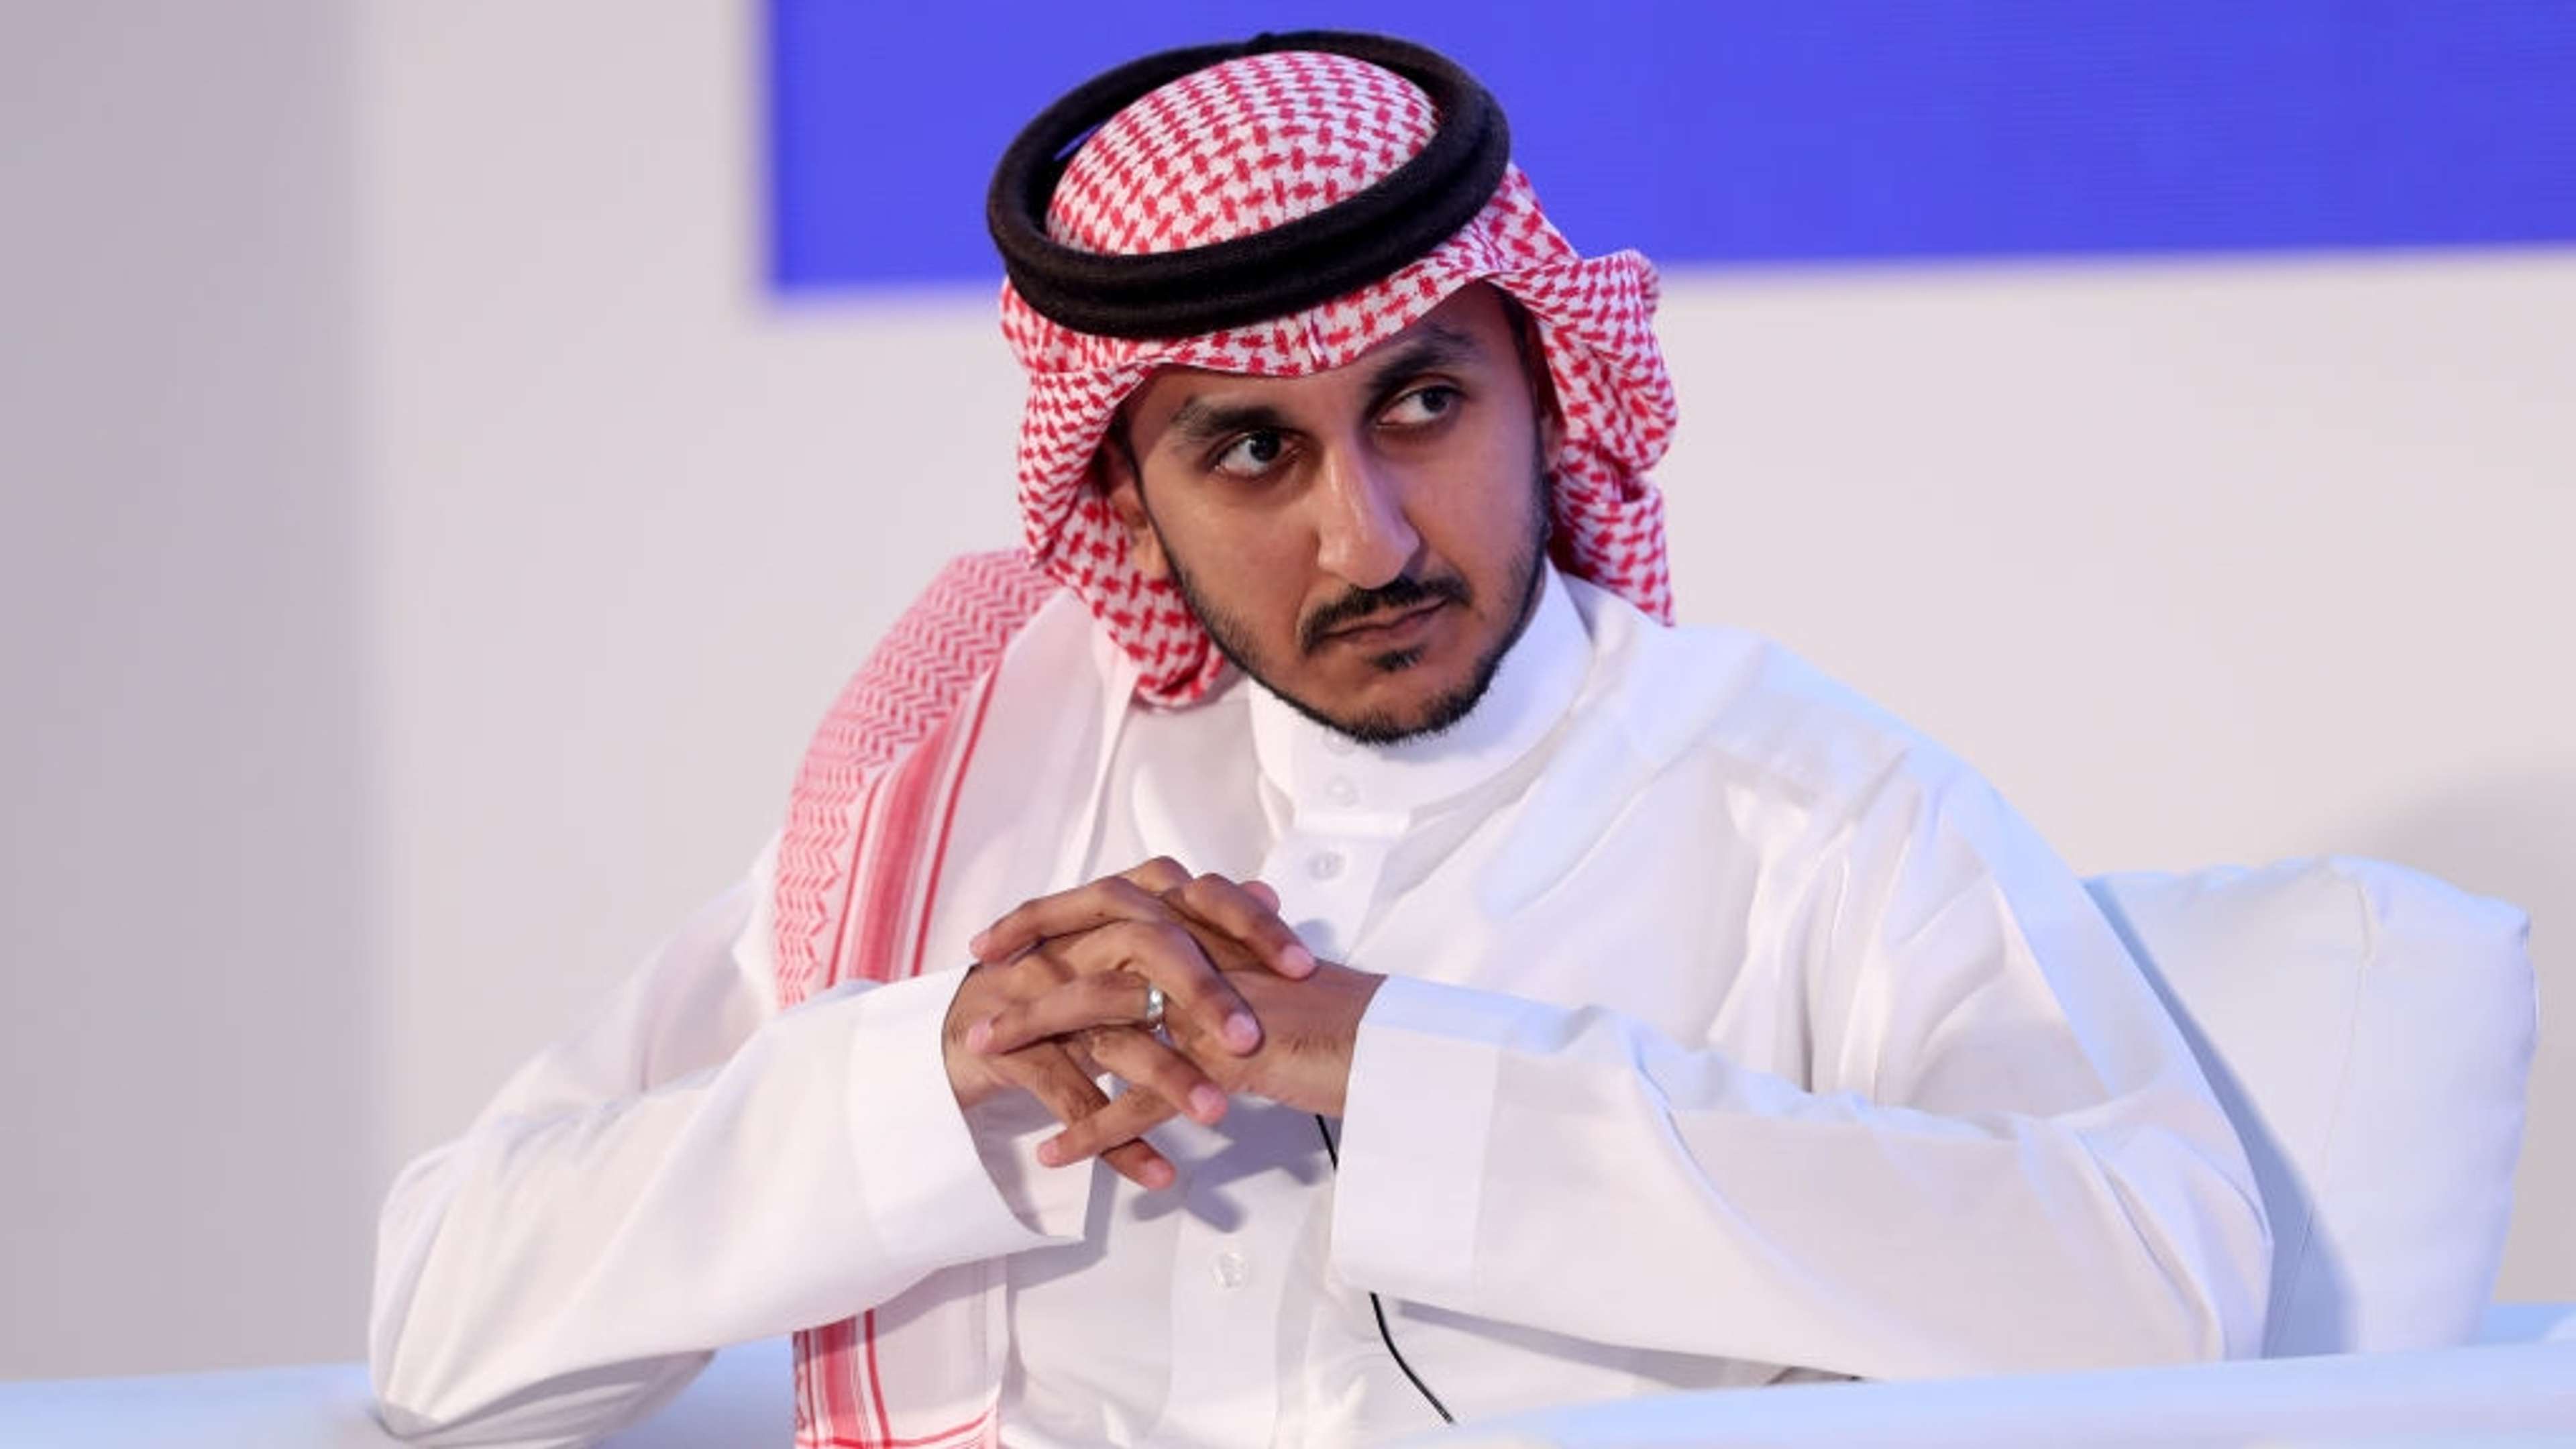 Ibrahim Alkassim; Saudi Arabian Football Federation